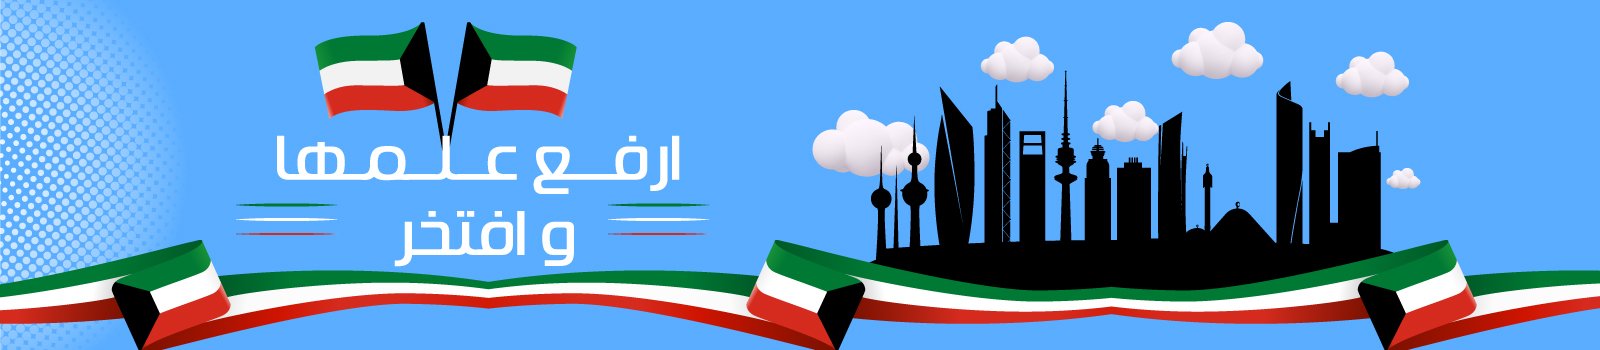 kuwait national day